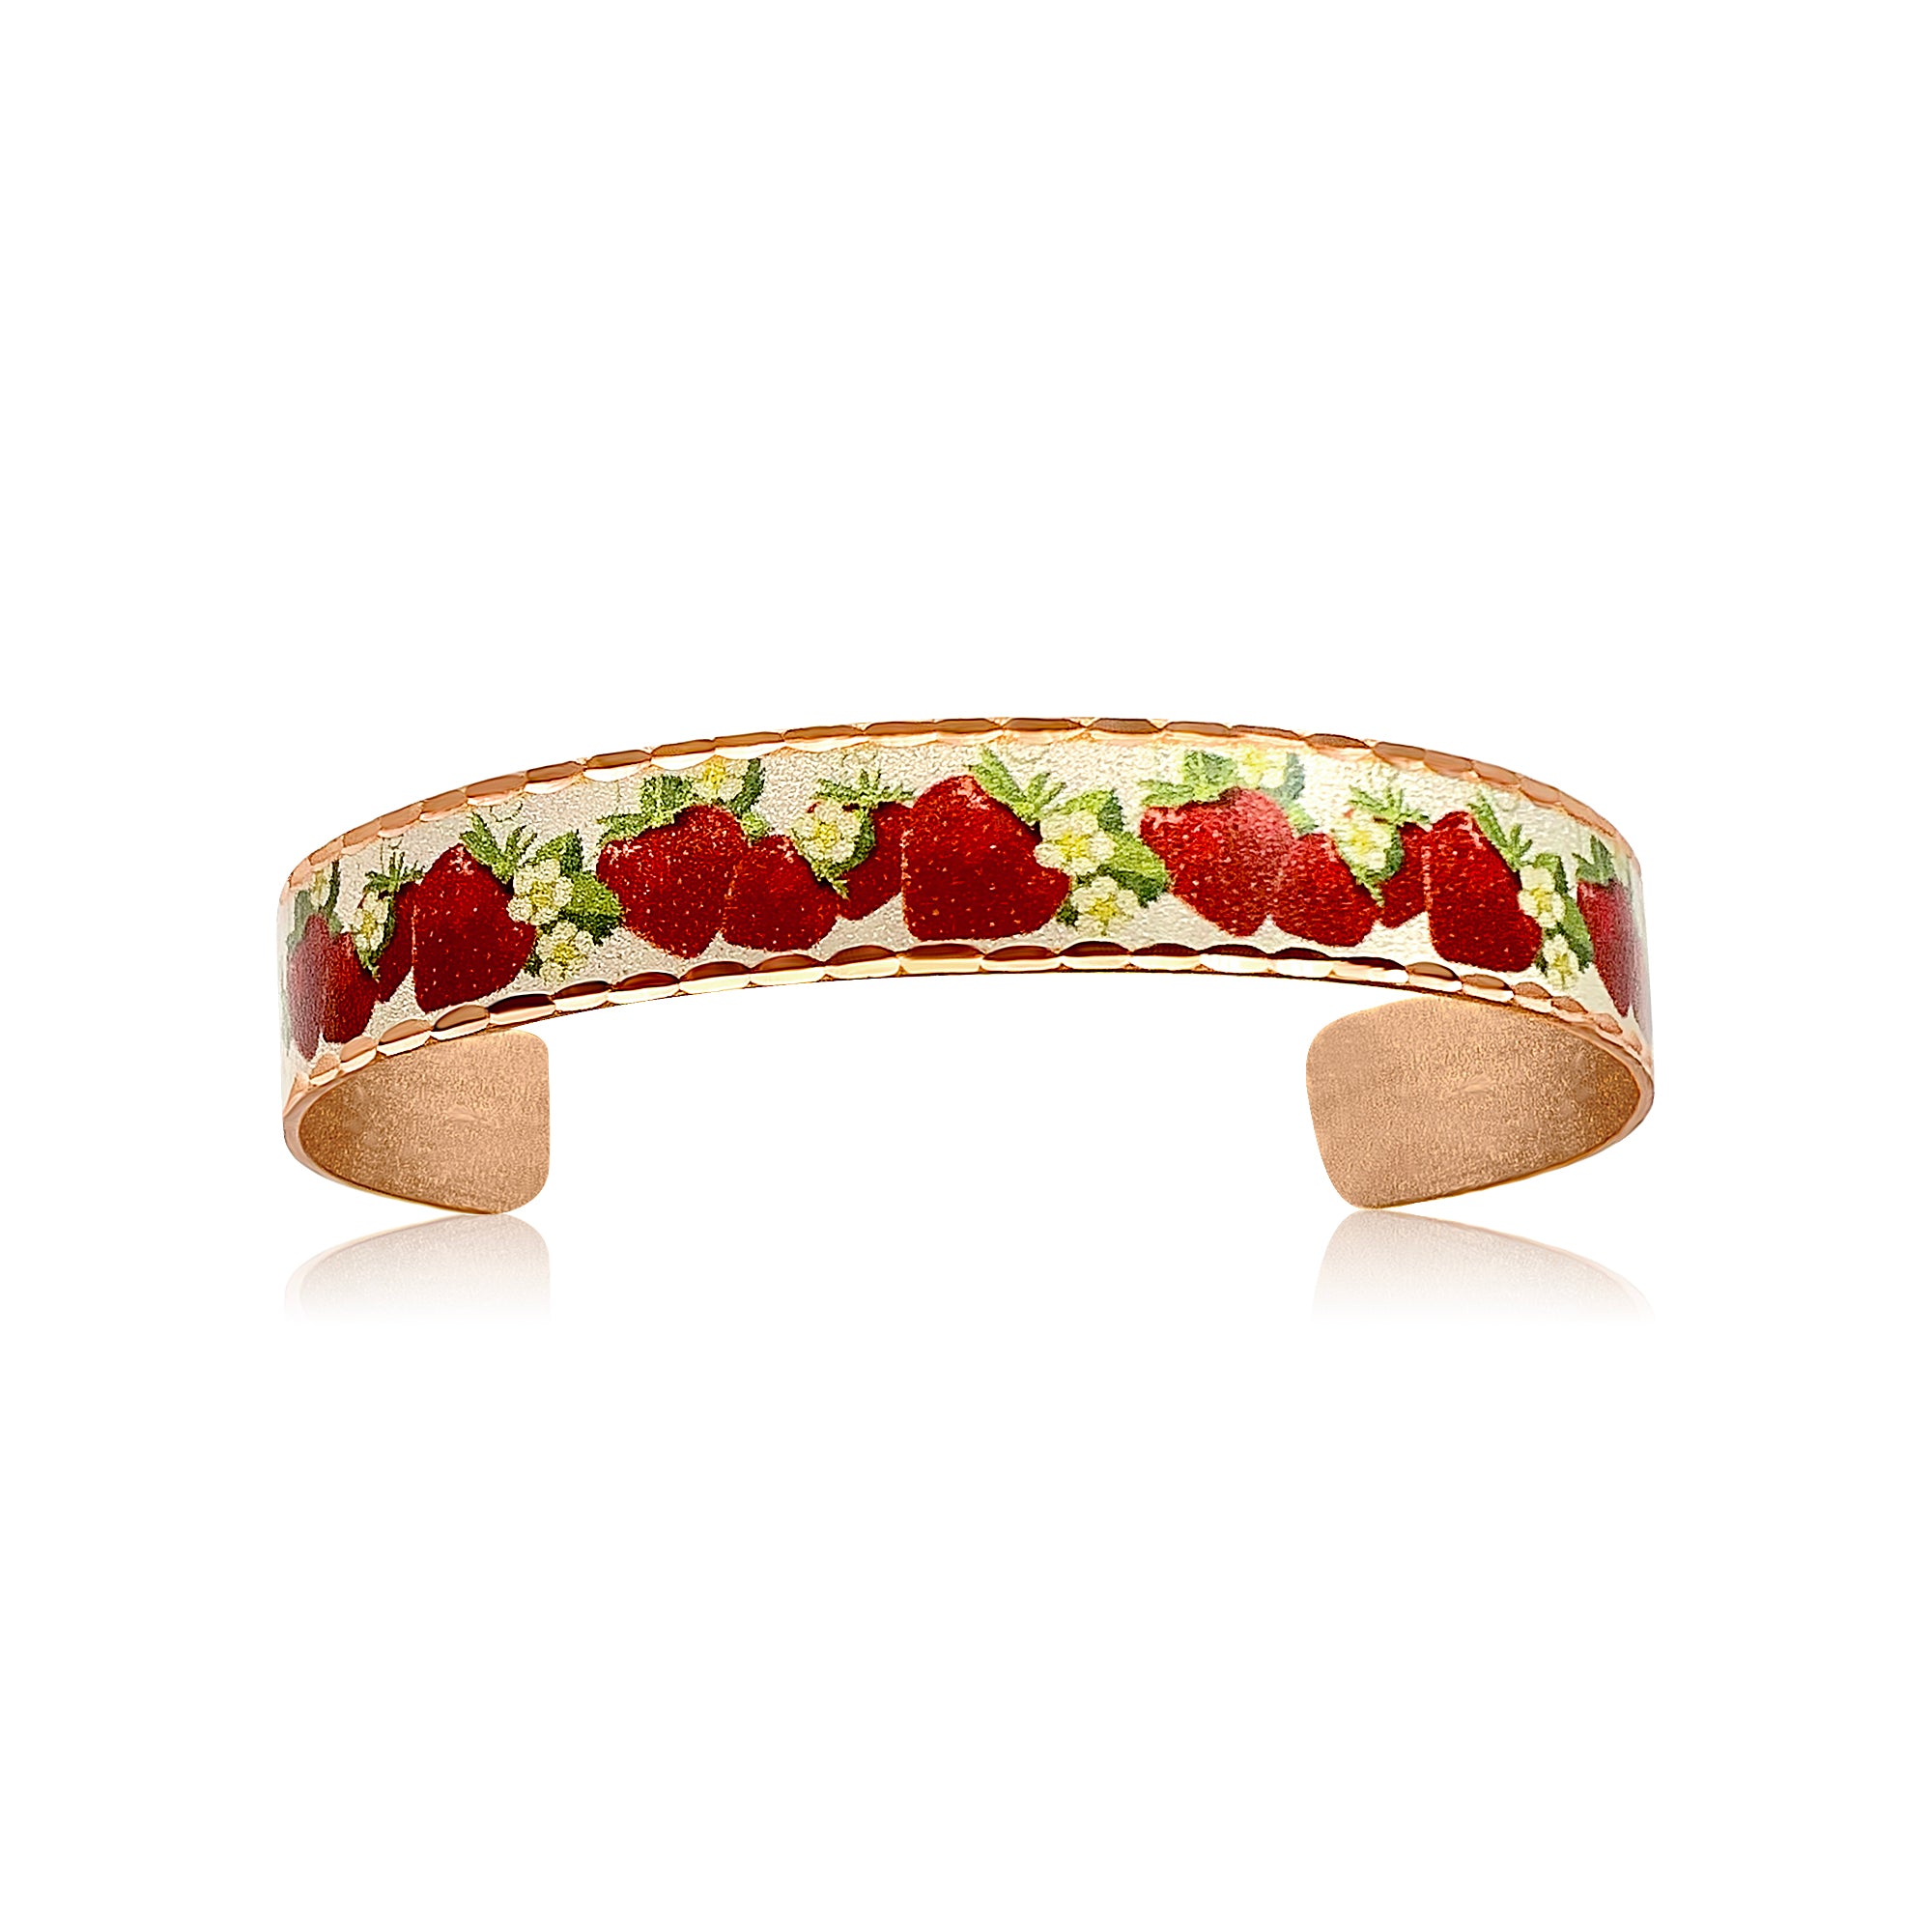 Strawberry design narrow bracelet